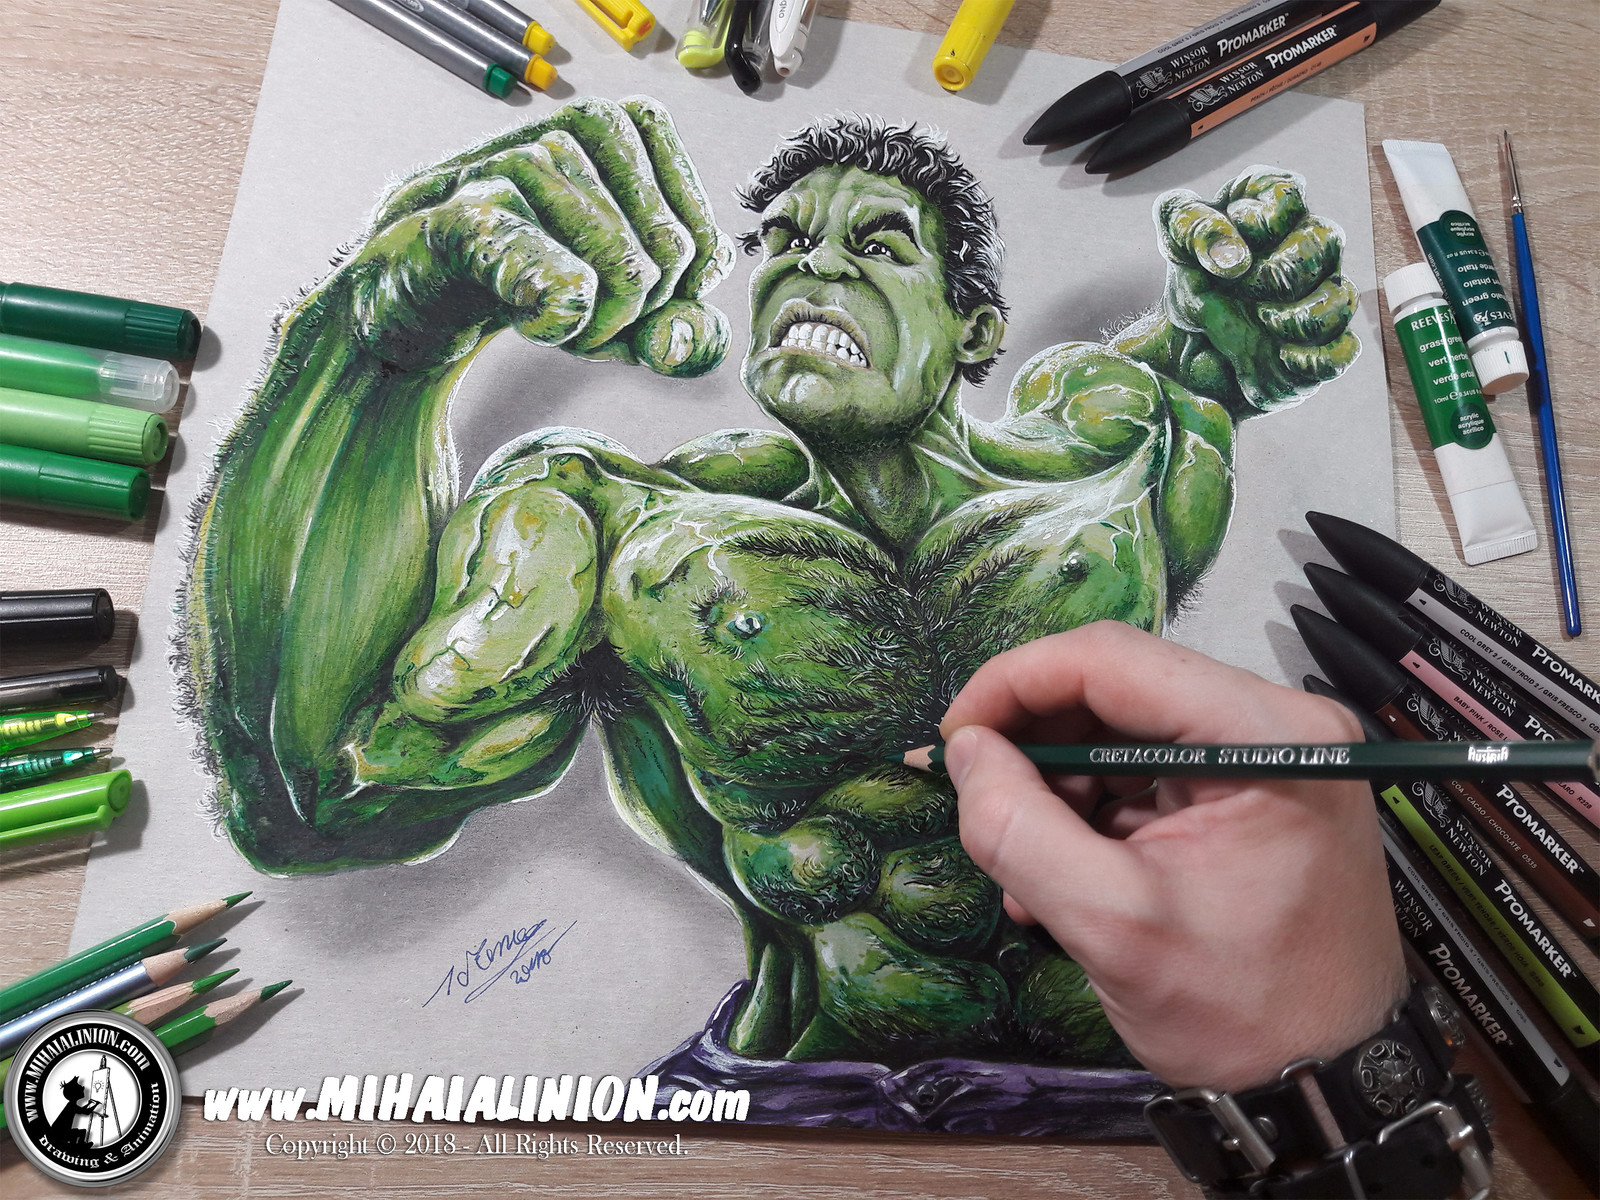 Drawing The Incredible Hulk - Bruce Banner - Mark Ruffalo inspired - Realistic 3D Comics Art